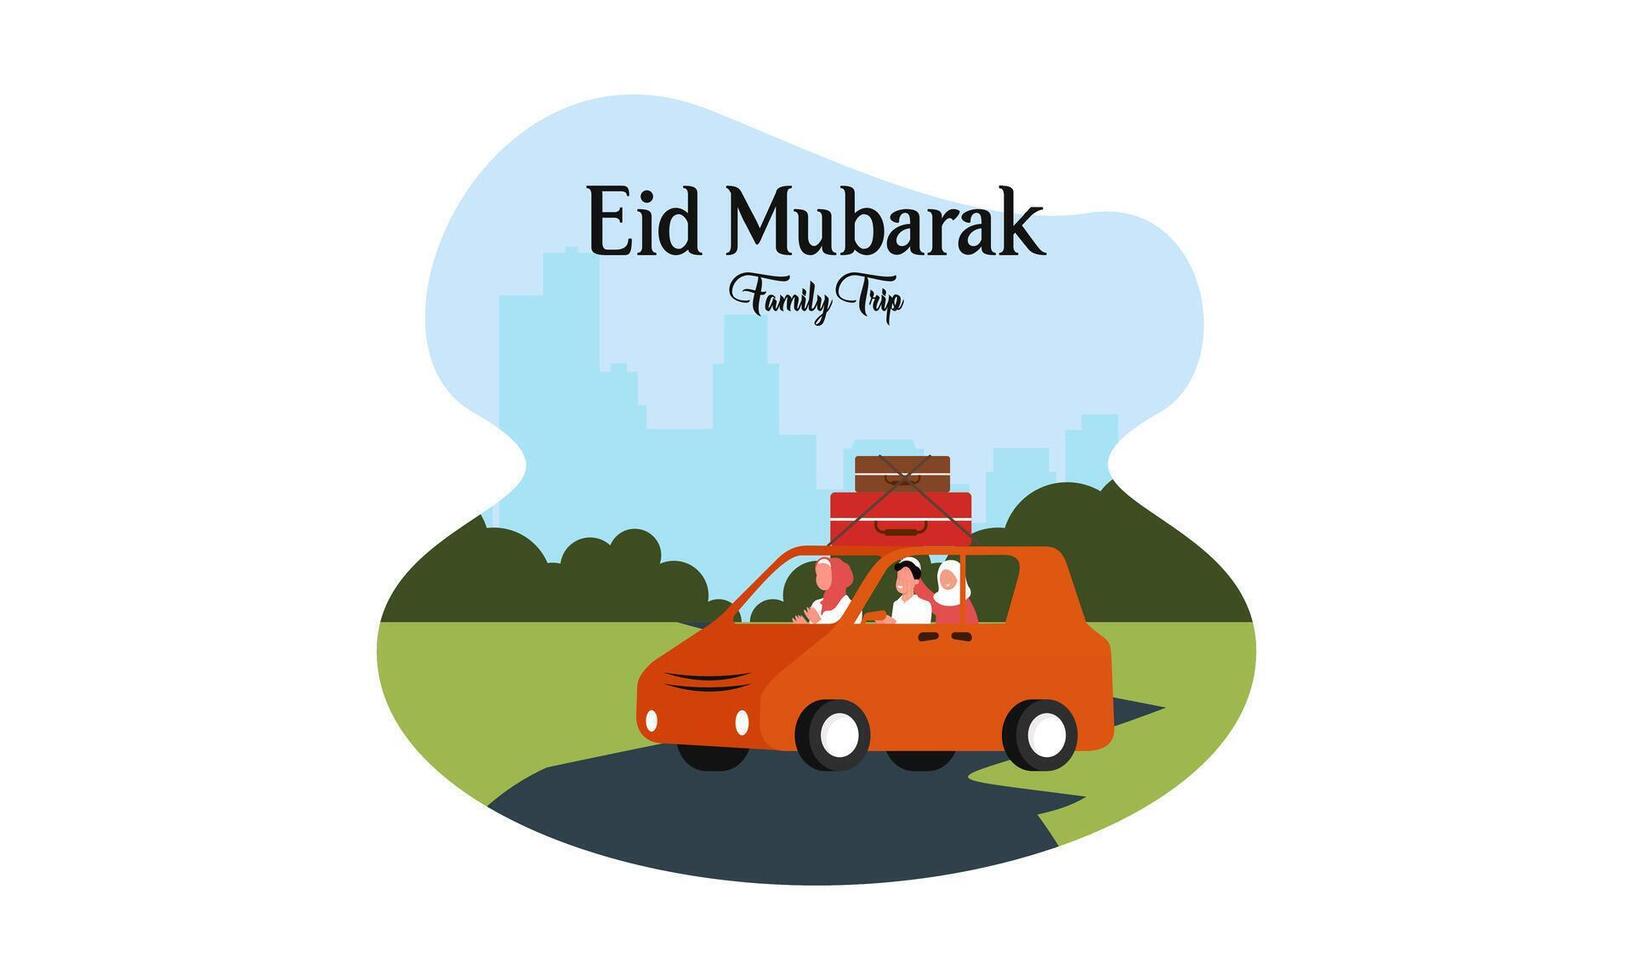 Muslim Family In Car Trip to Hometown during Eid Mubarak Celebration vector